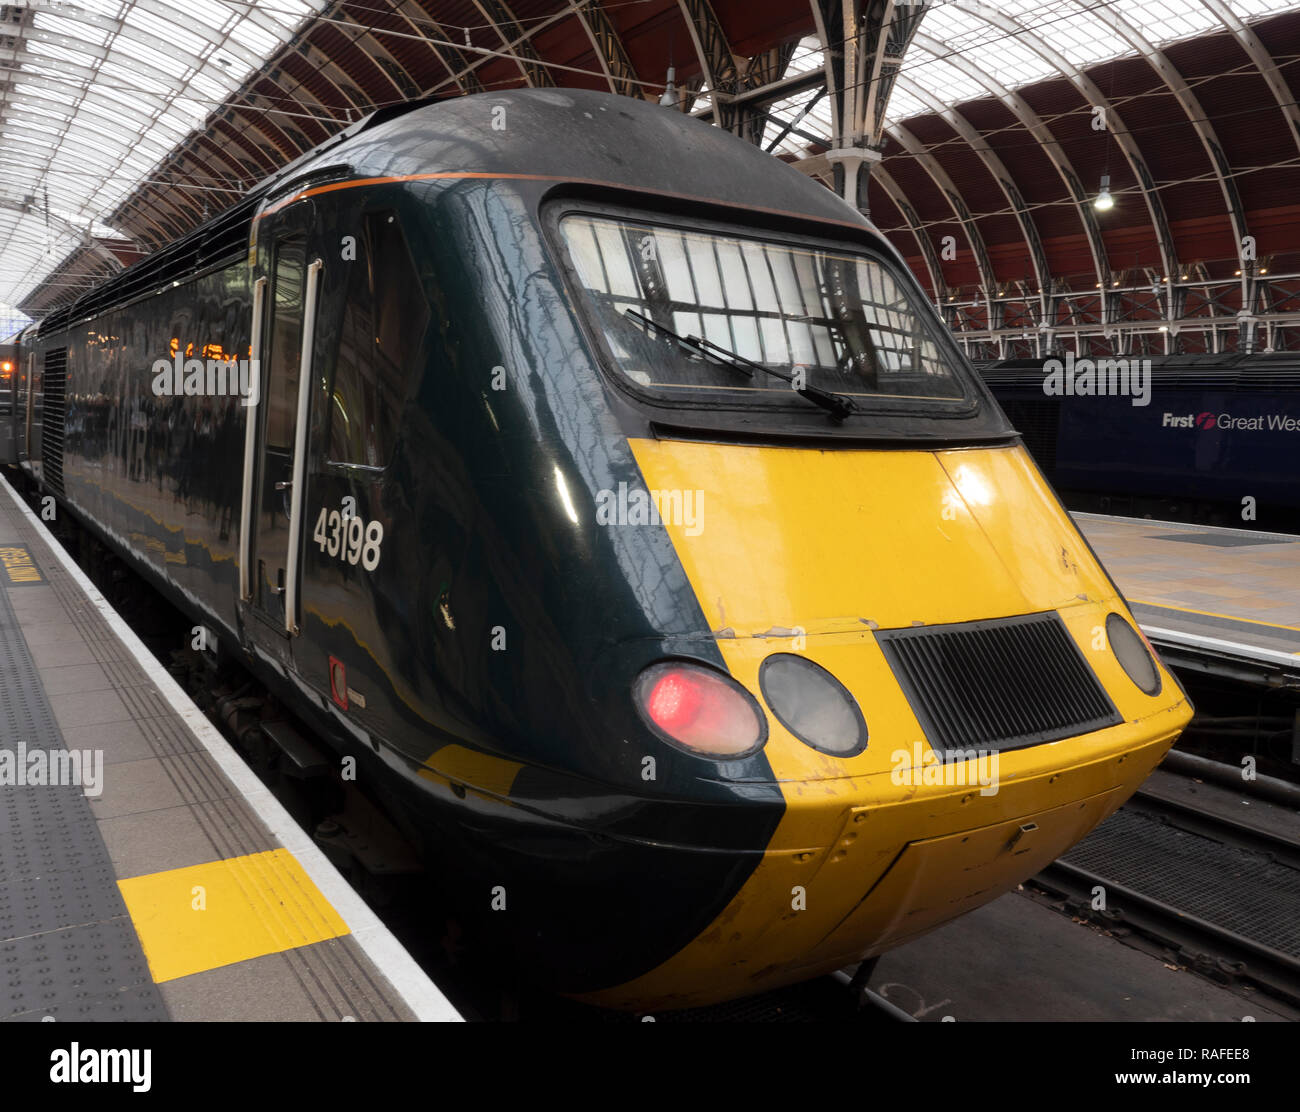 GWR (British Rail Class 43 HST) InterCity 124 train at Paddington Railway Station, Paddington, London, England, UK. Stock Photo